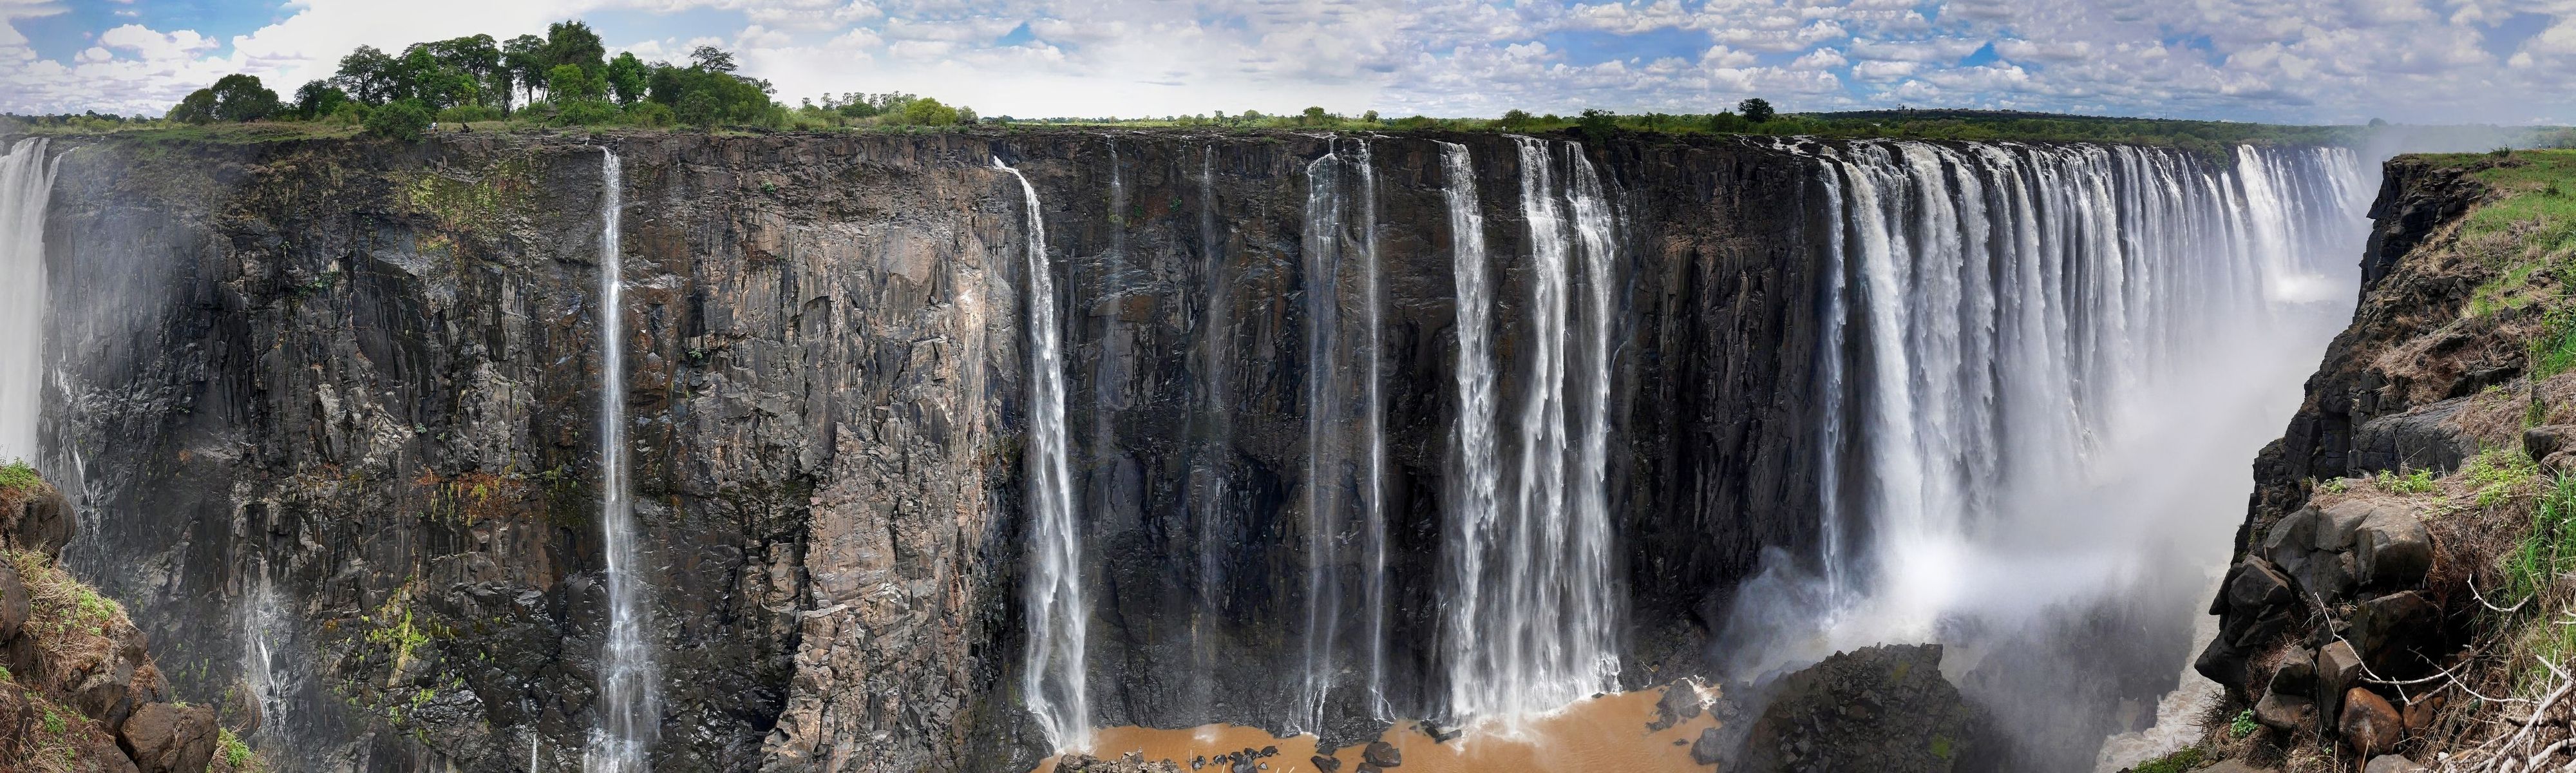 victoria falls waterfalls in zimbabwe